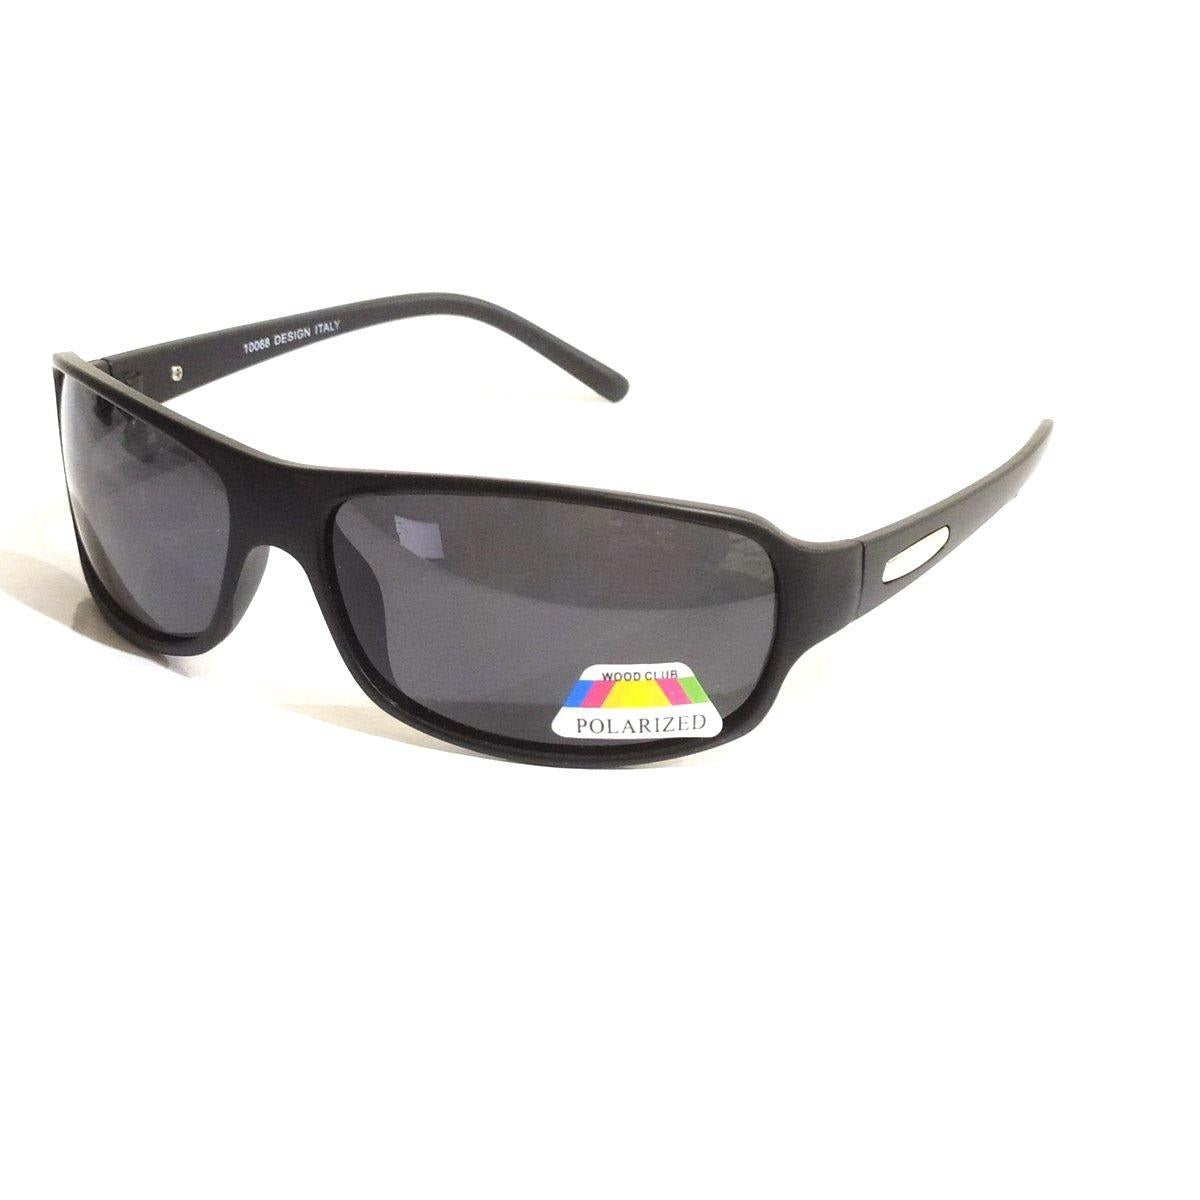 Wraparound Sports Polarized Sunglasses for Men and Women 10068MBK